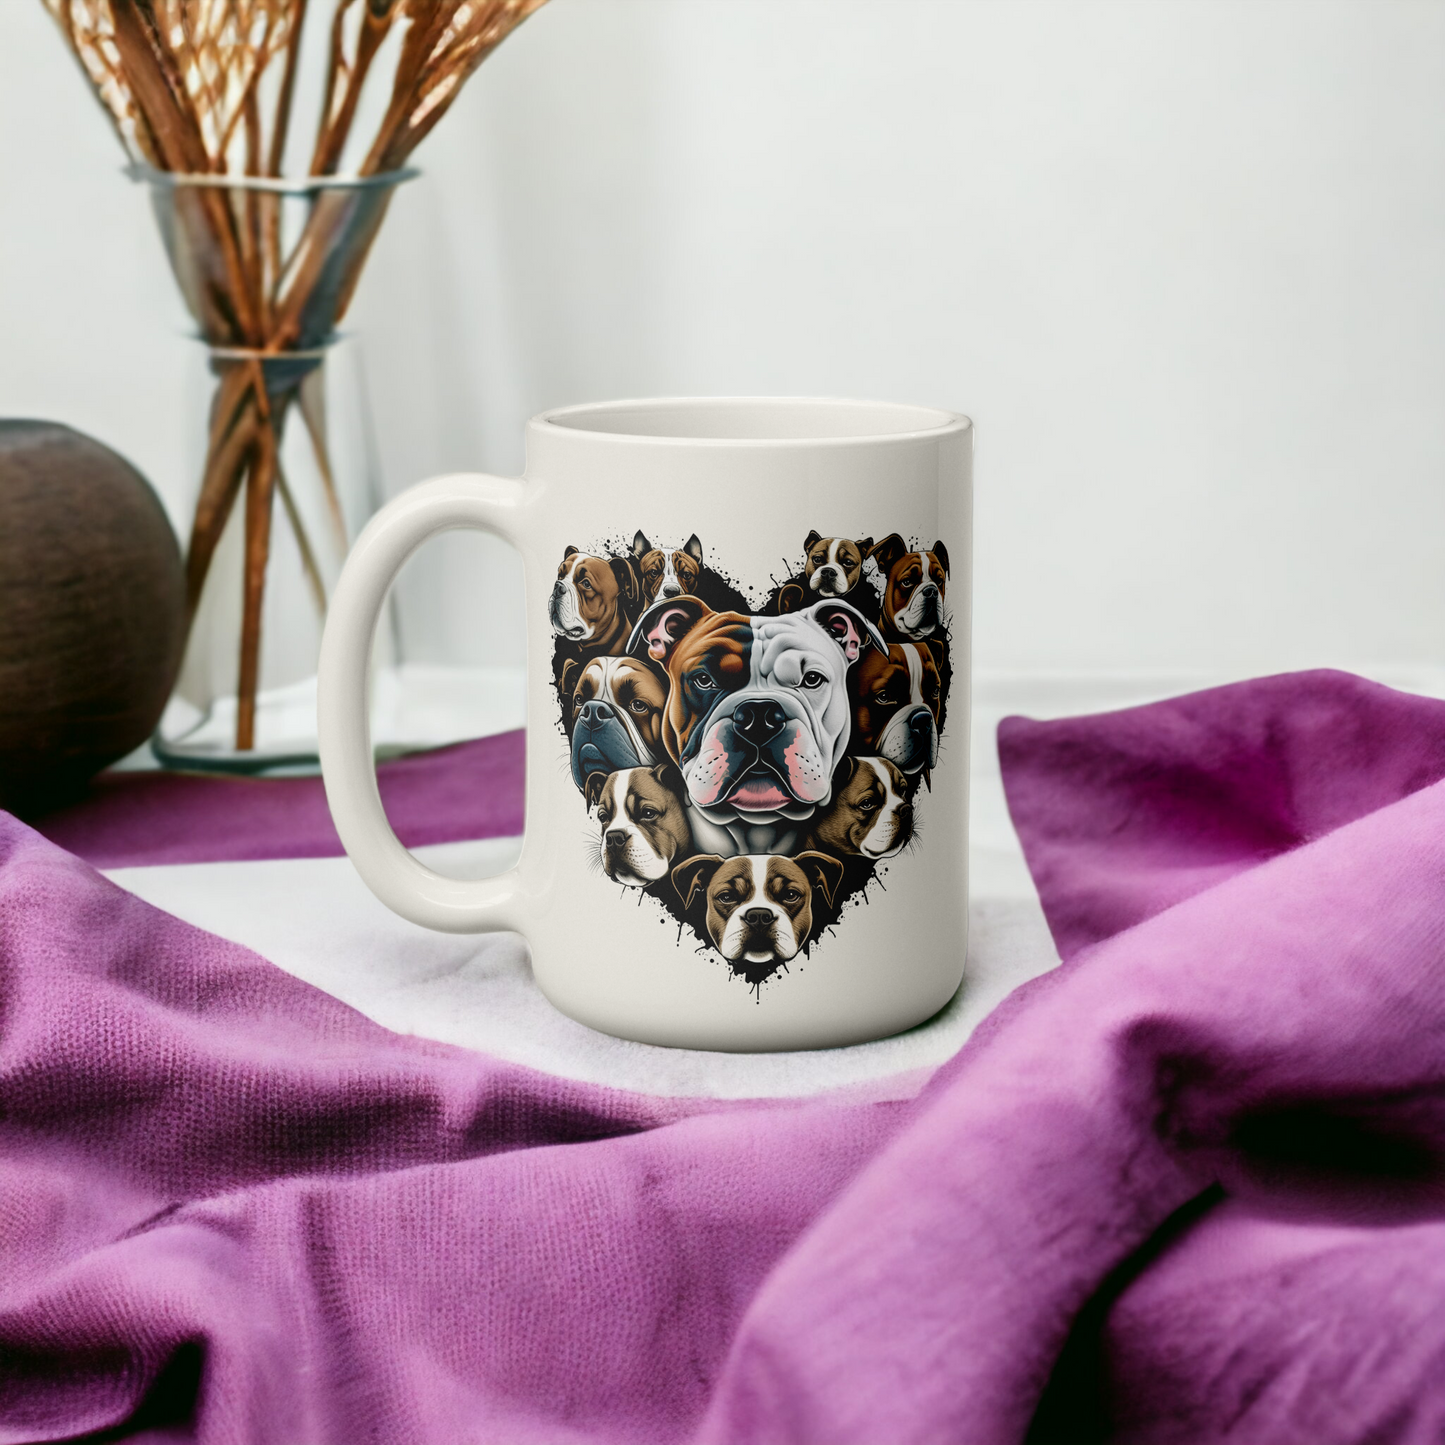  American Bulldogs Heart Coffee Mug by Free Spirit Accessories sold by Free Spirit Accessories